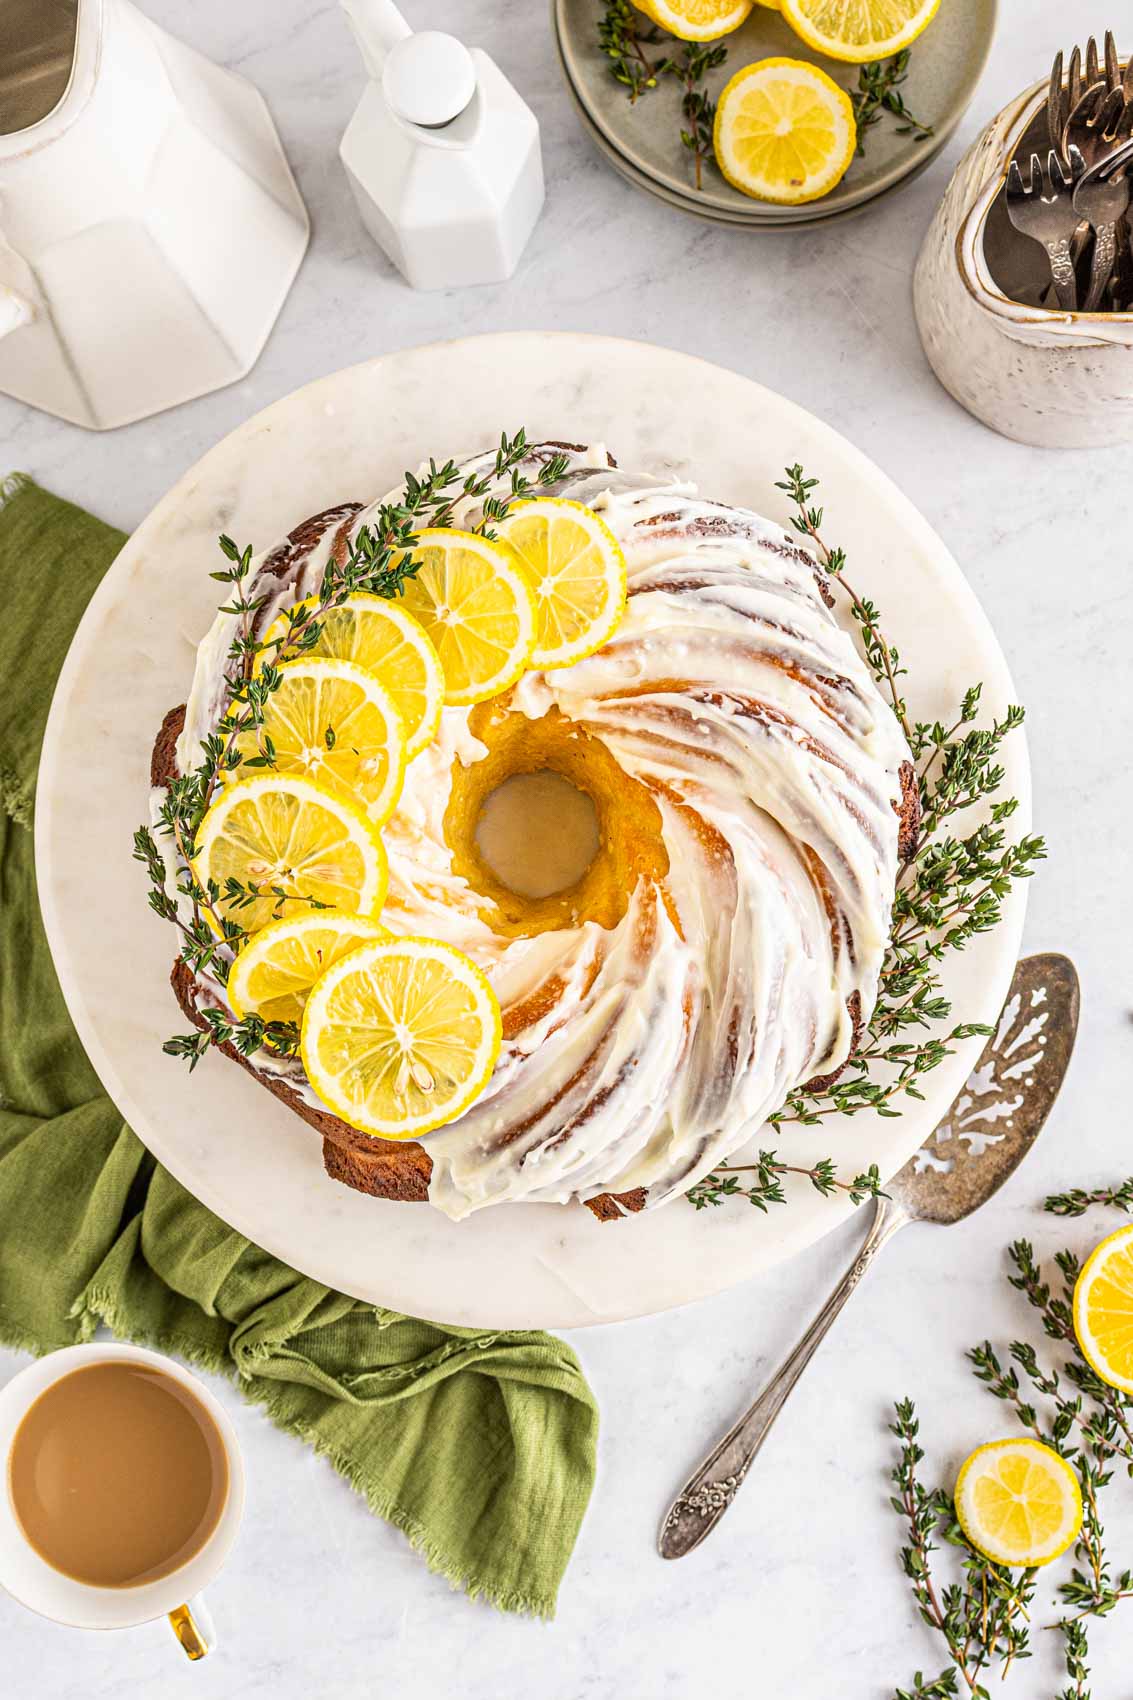 lemon bundt cake with frosting and fresh lemon slices with a coffee mug and seasonings